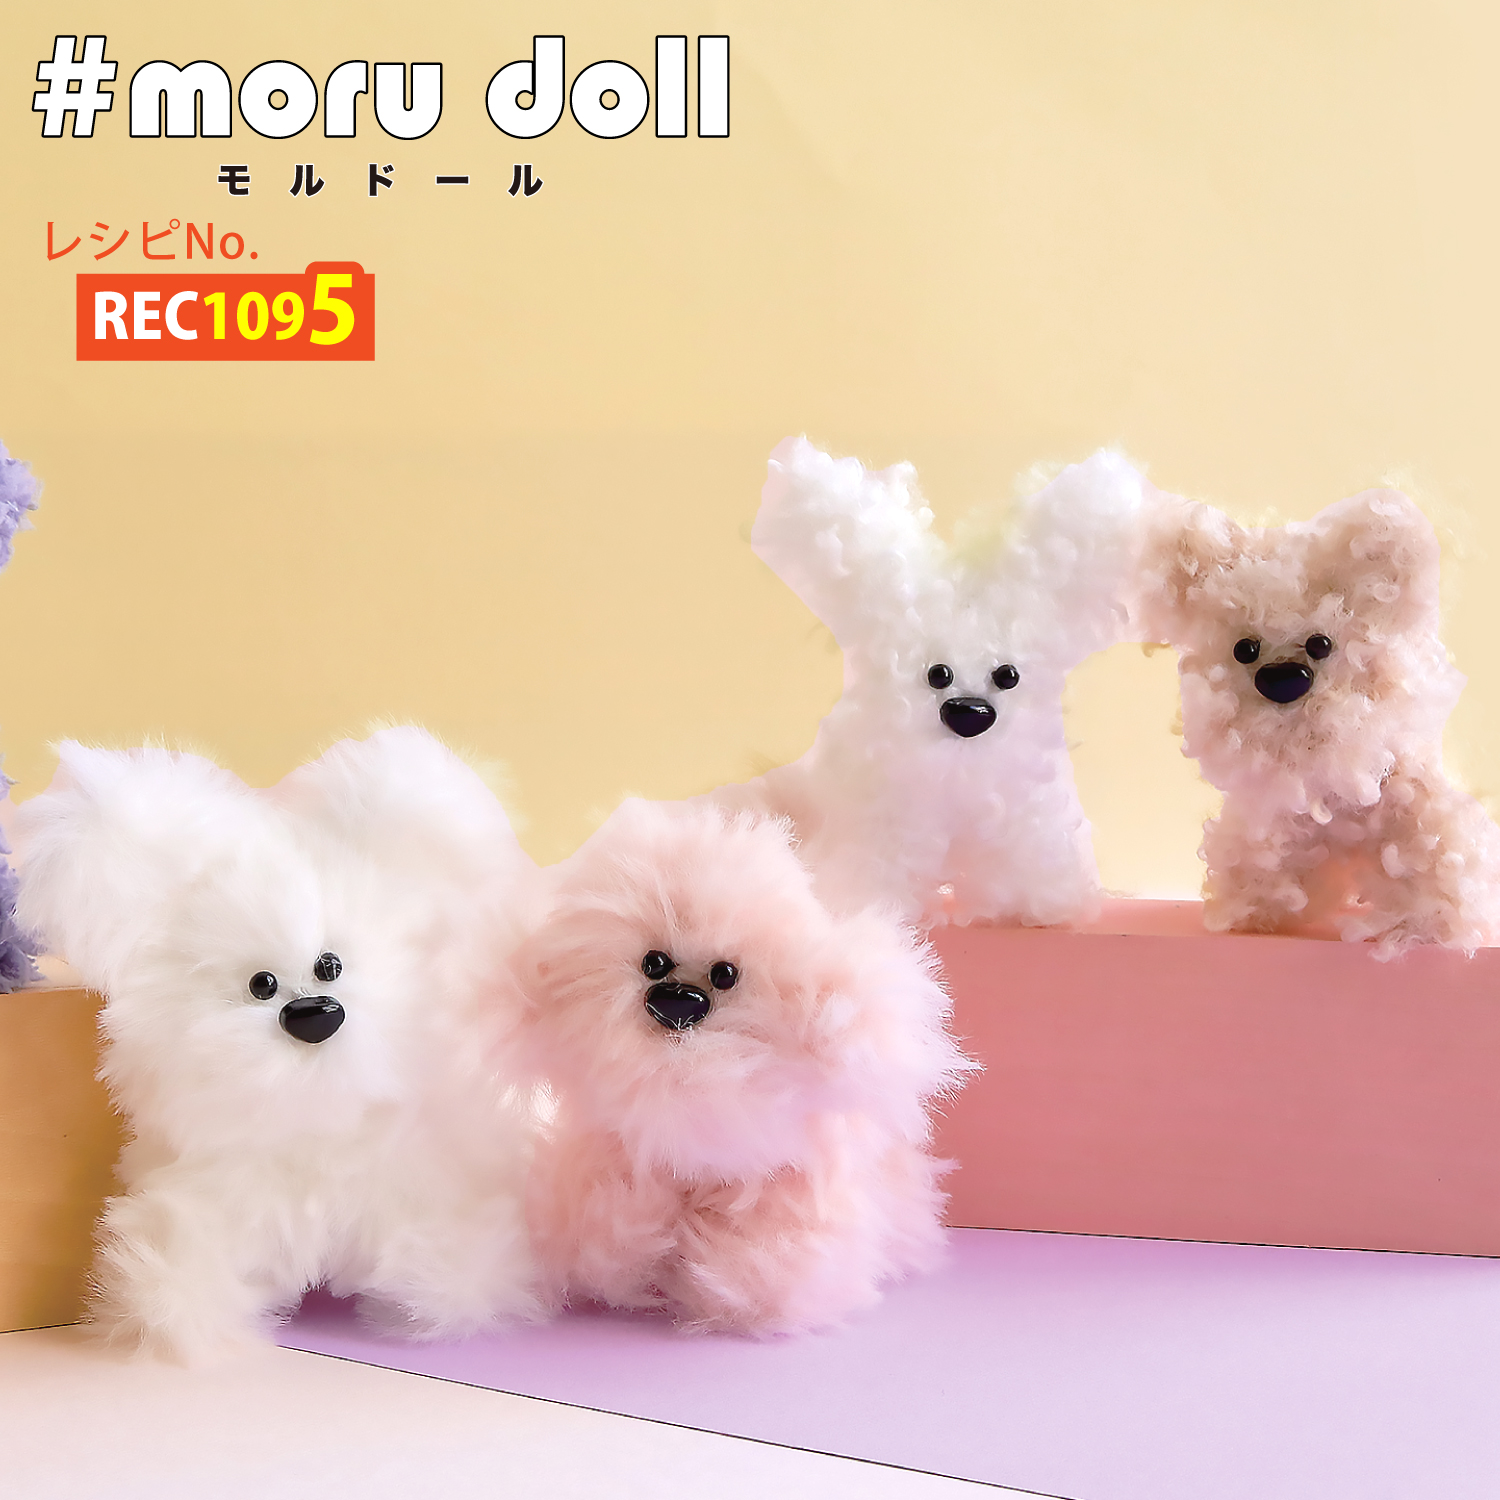 REC1095 mall doll Korean miscellaneous goods Recipe (pcs)